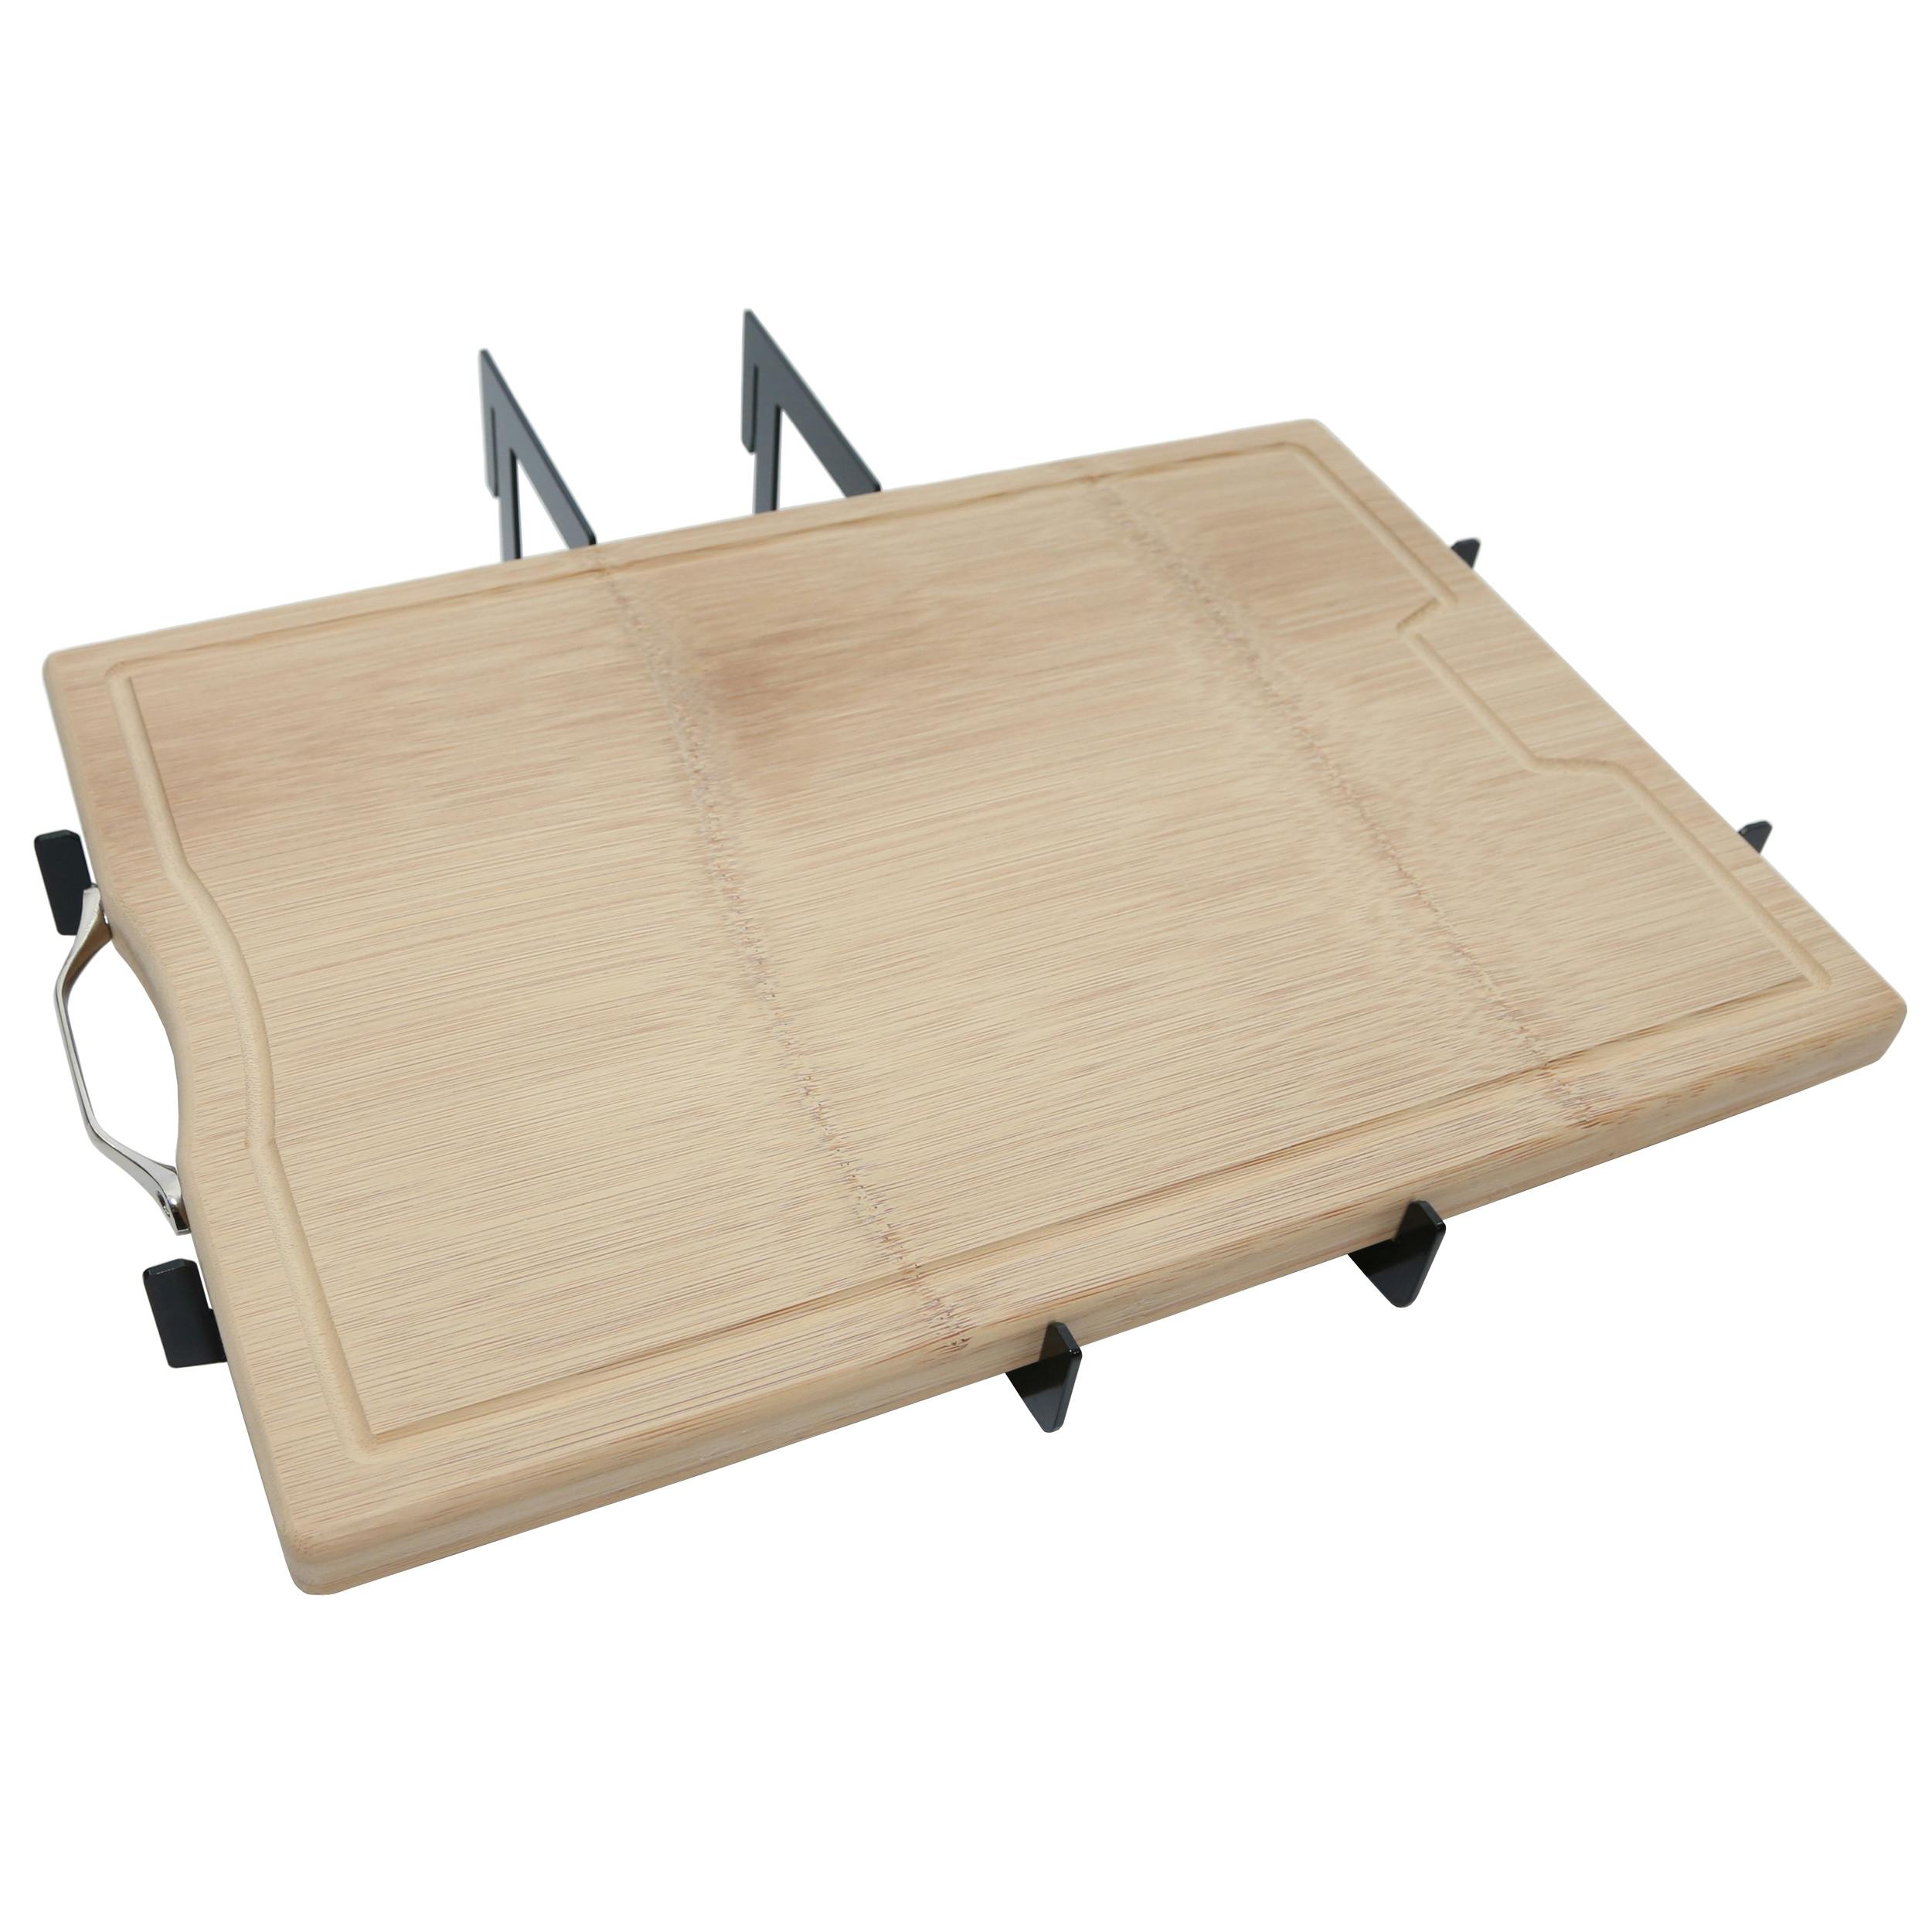 KUDU Grills KUDU Cutting Board and Side Table